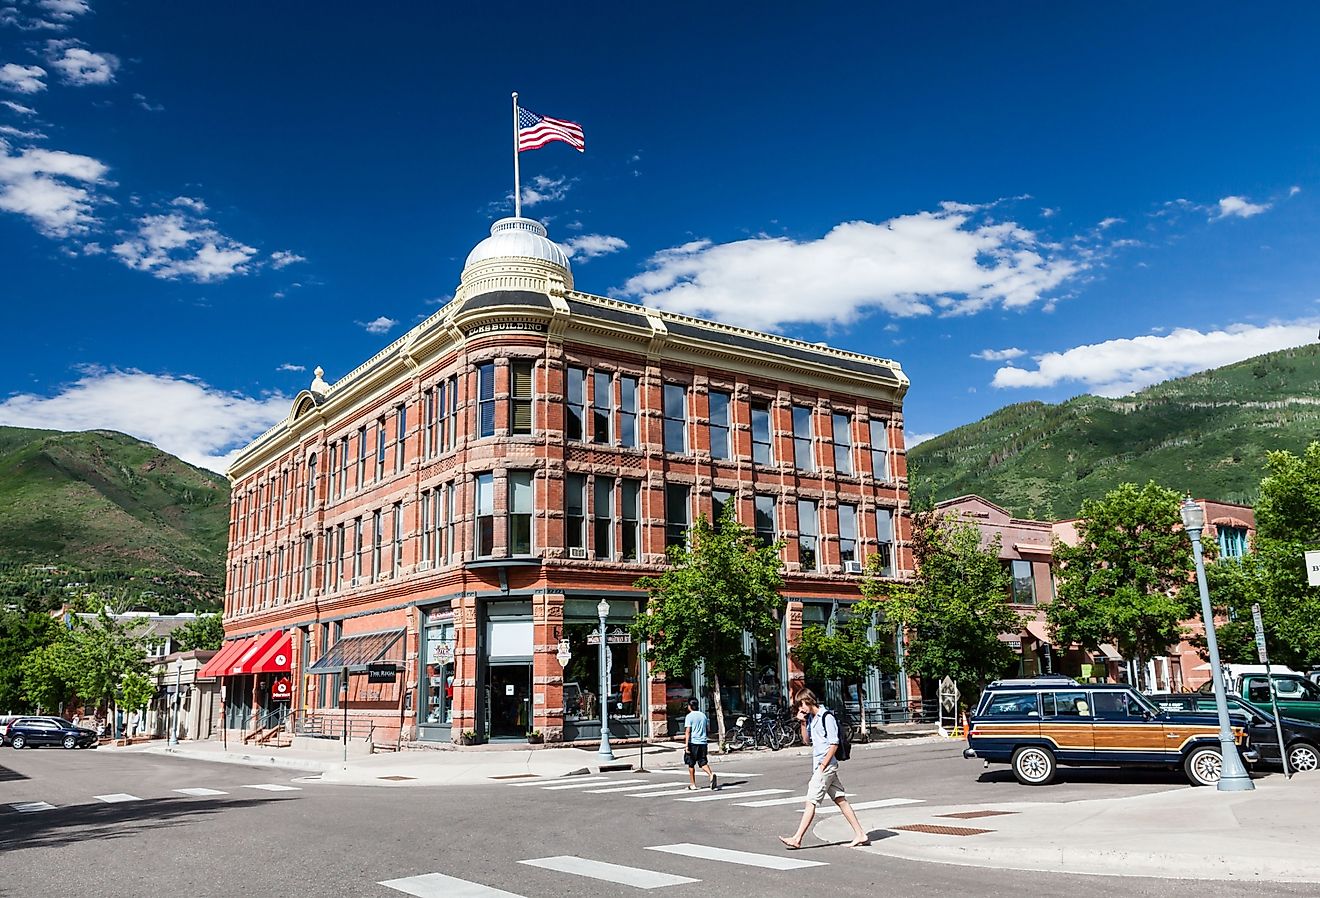 Downtown Aspen, Colorado. Image credit Oscity via Shutterstock